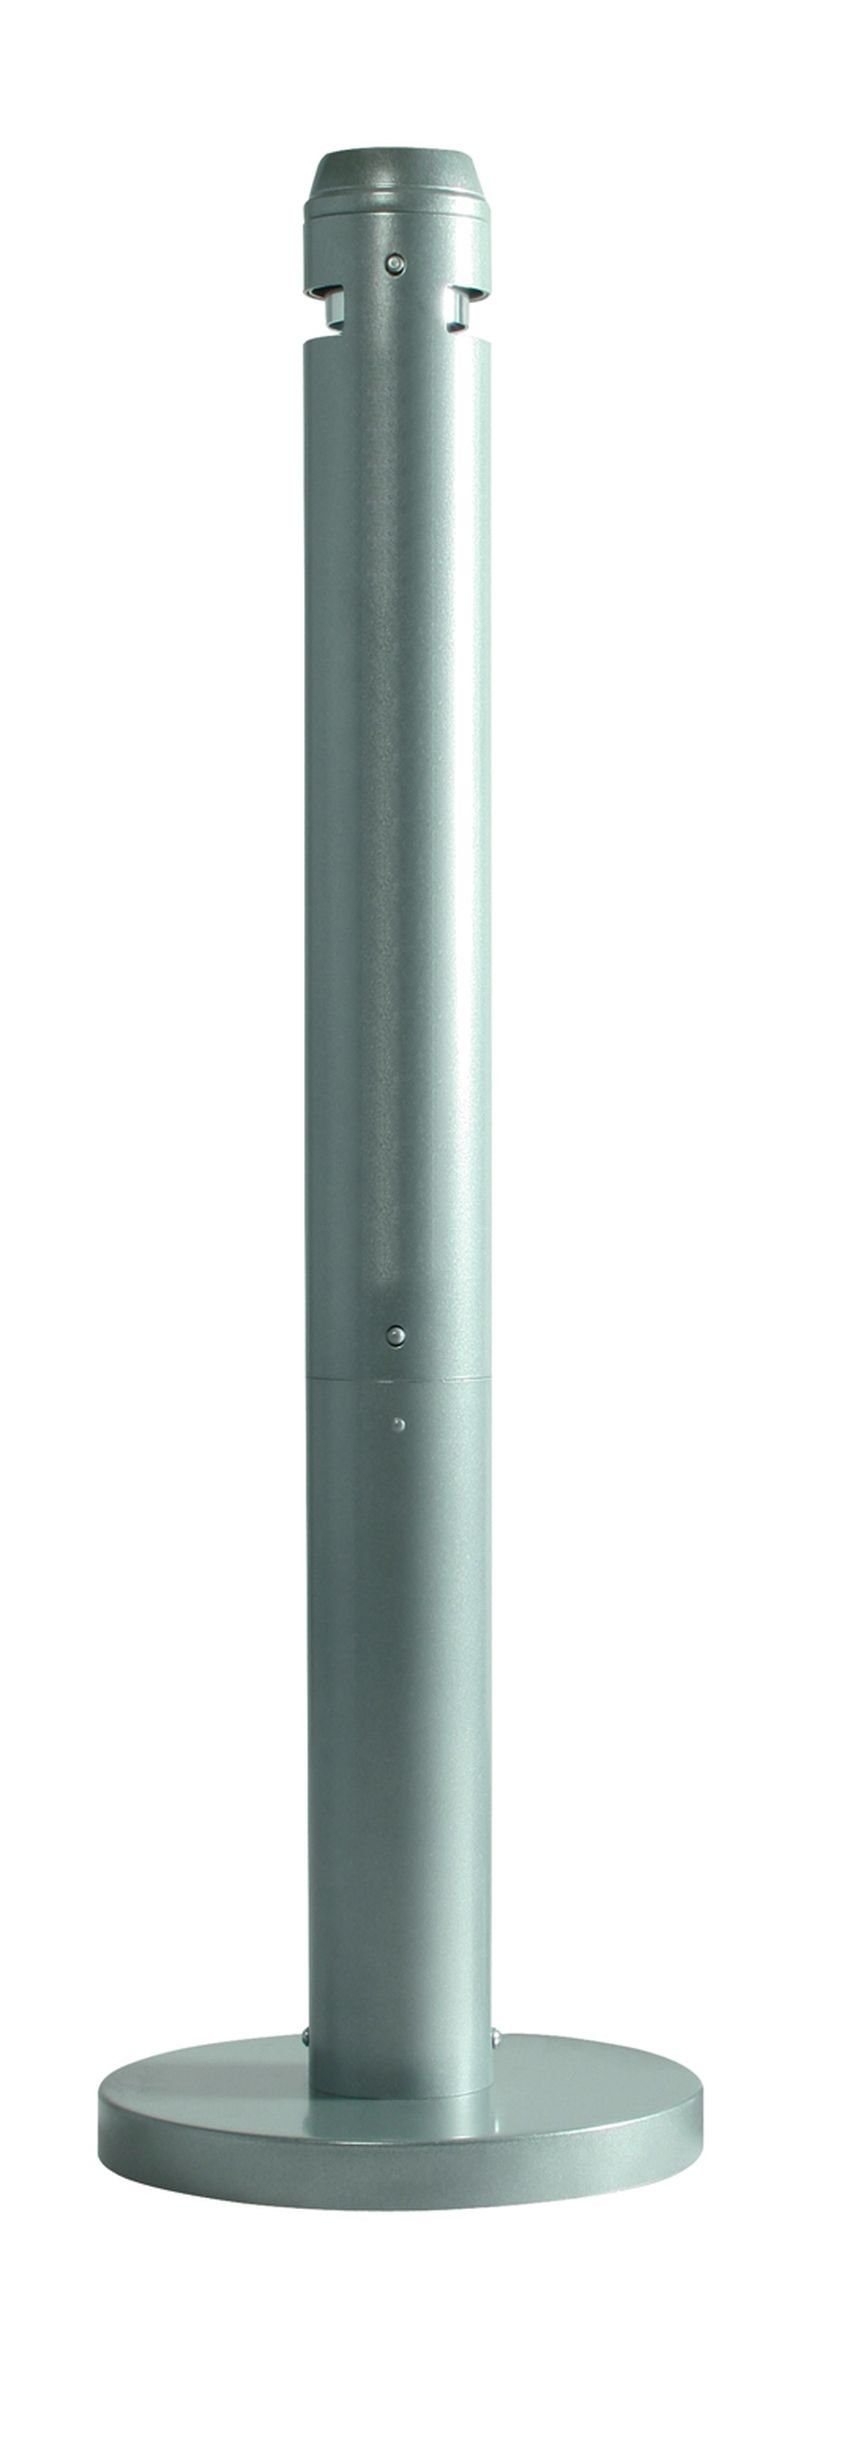 Rubbermaid Mülleimer Rubbermaid Smokers' Pole, silber-metallic